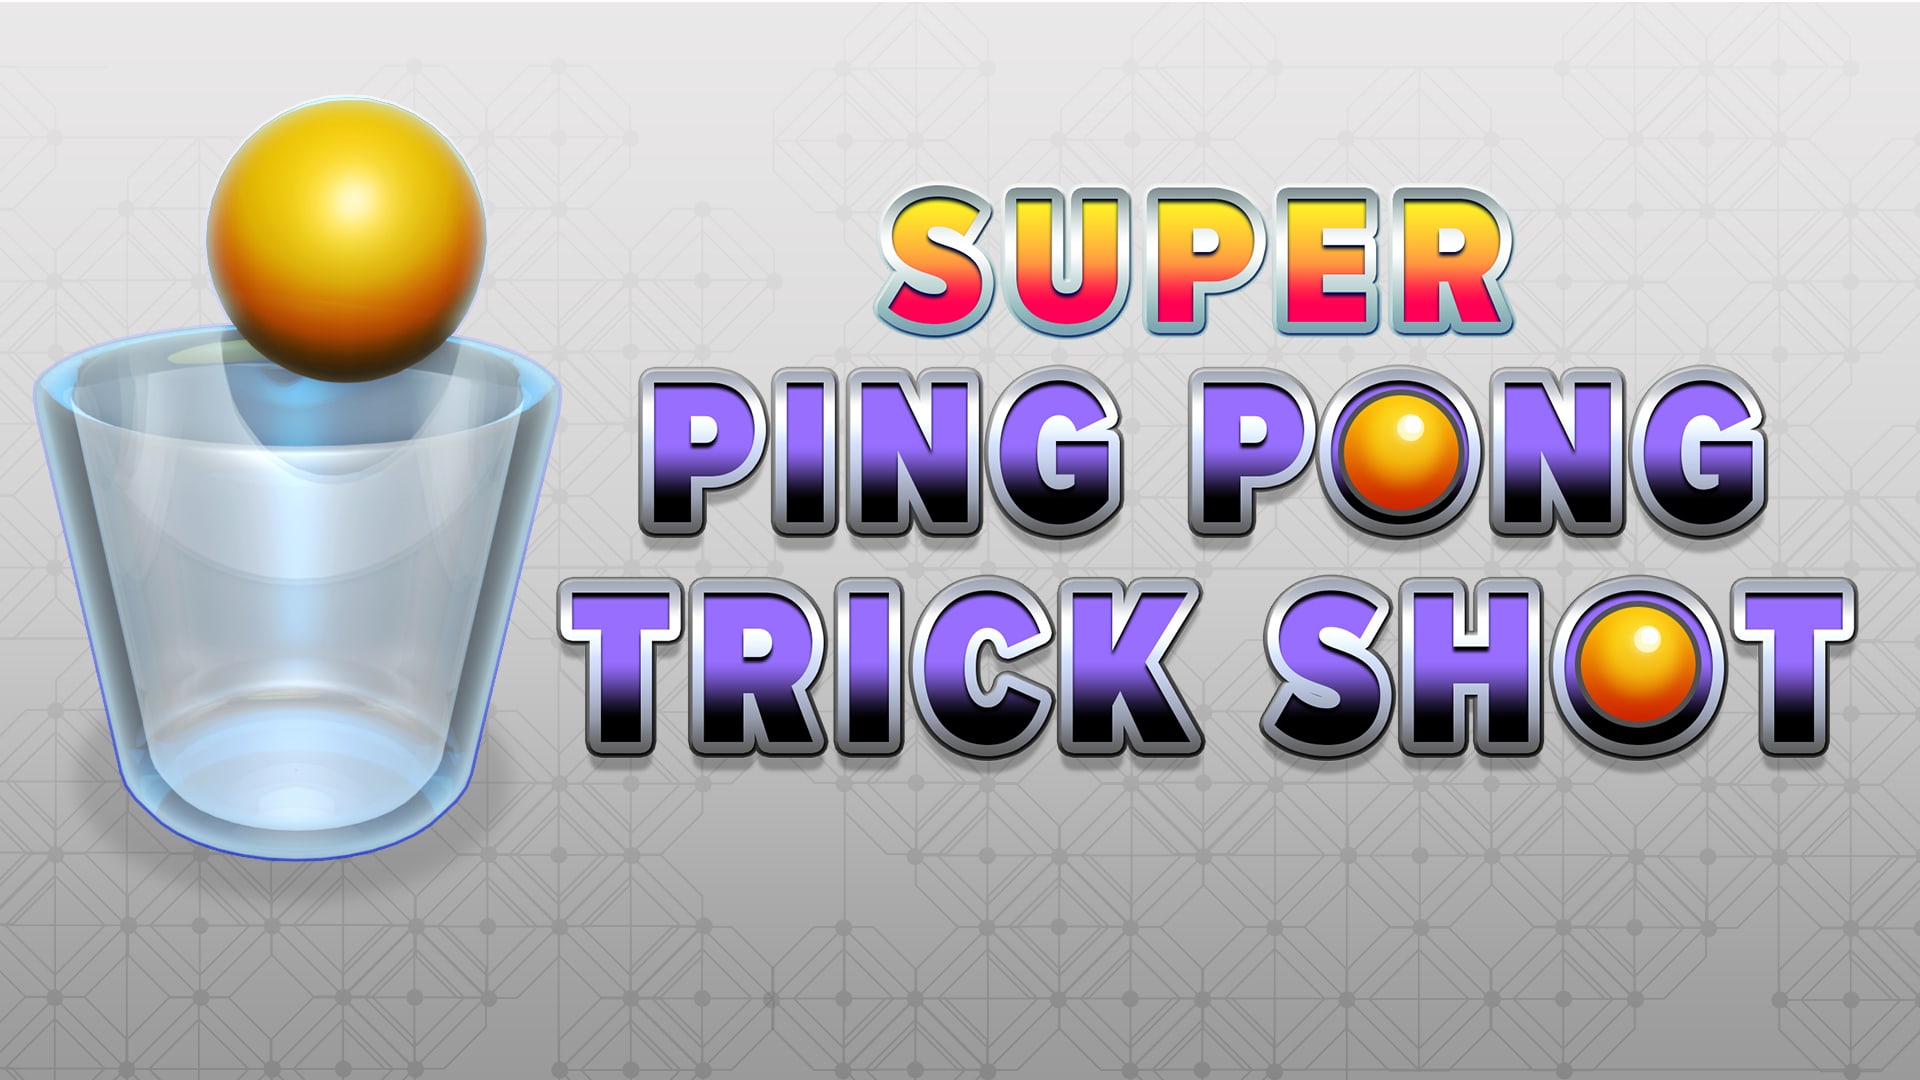 Super Ping Pong Trick Shot